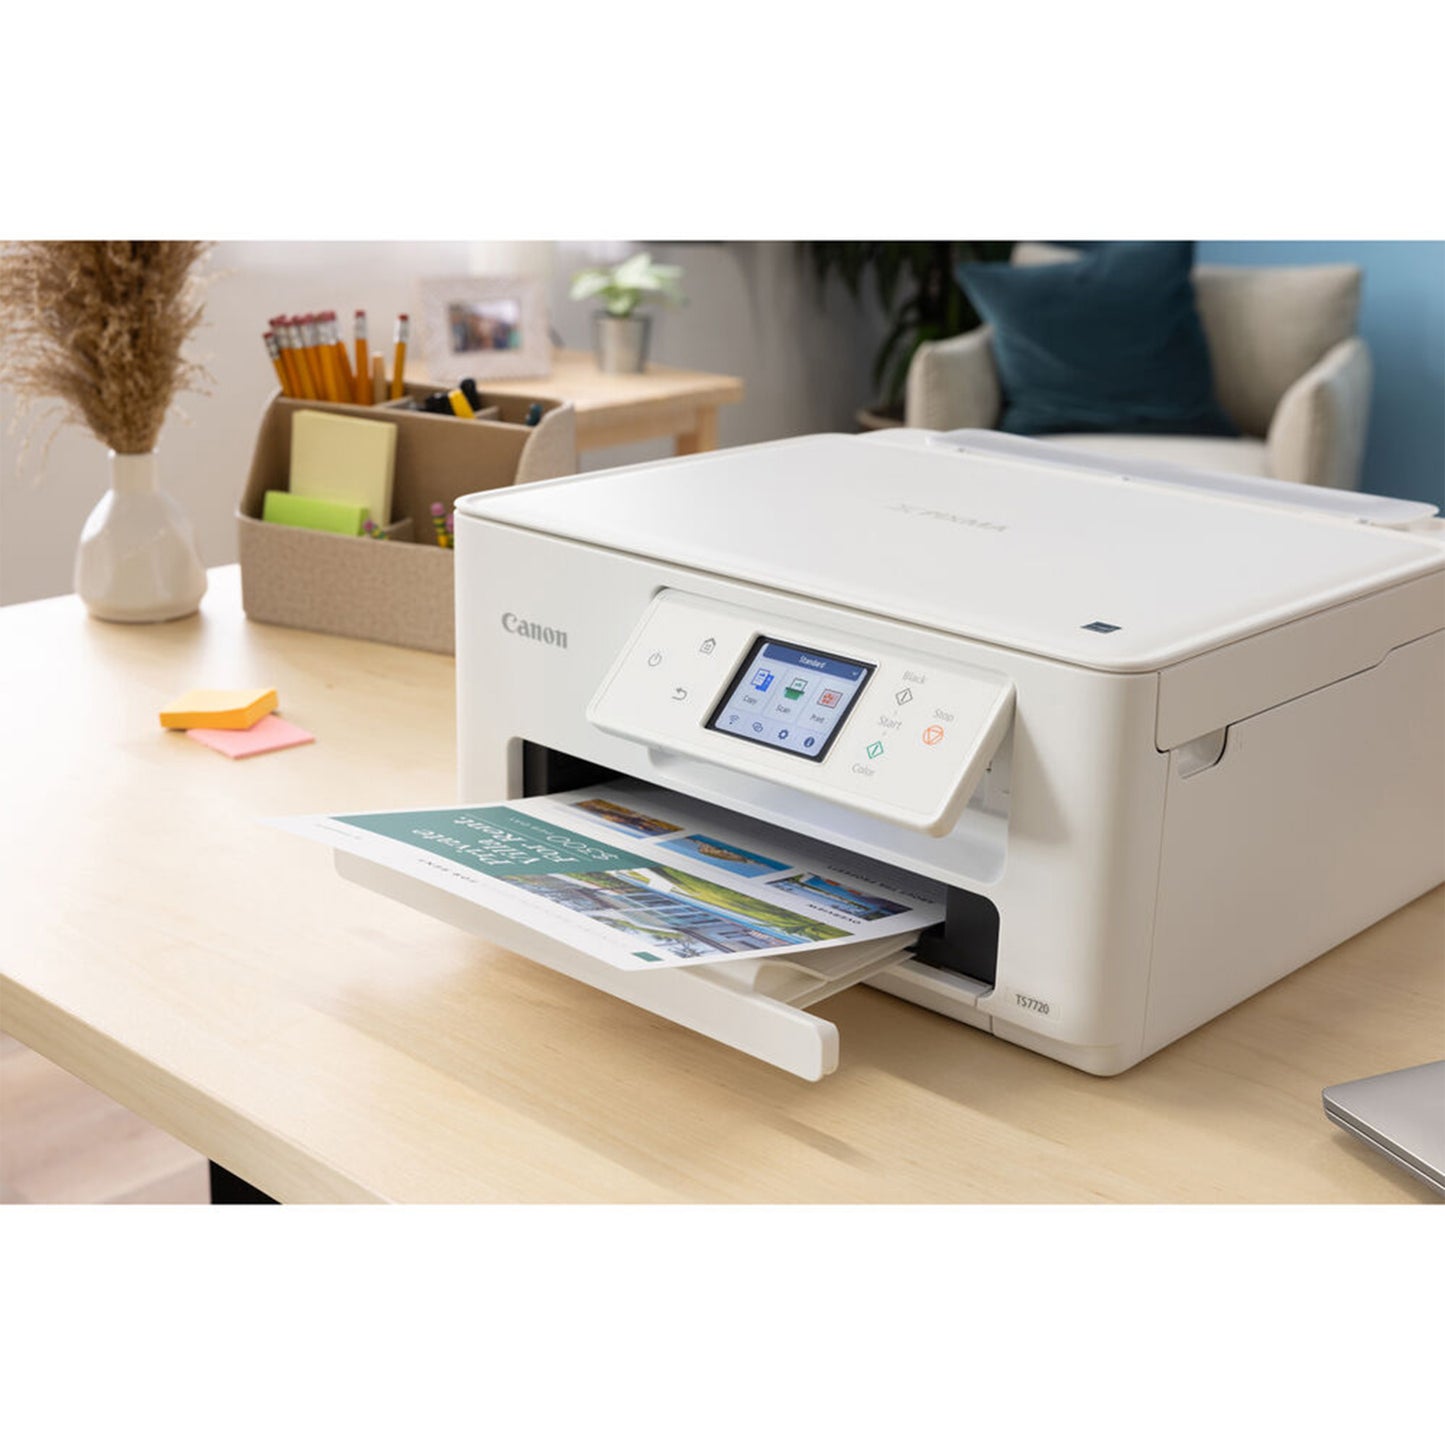 PIXMA TR7820 Wireless Home All-in-One Printer